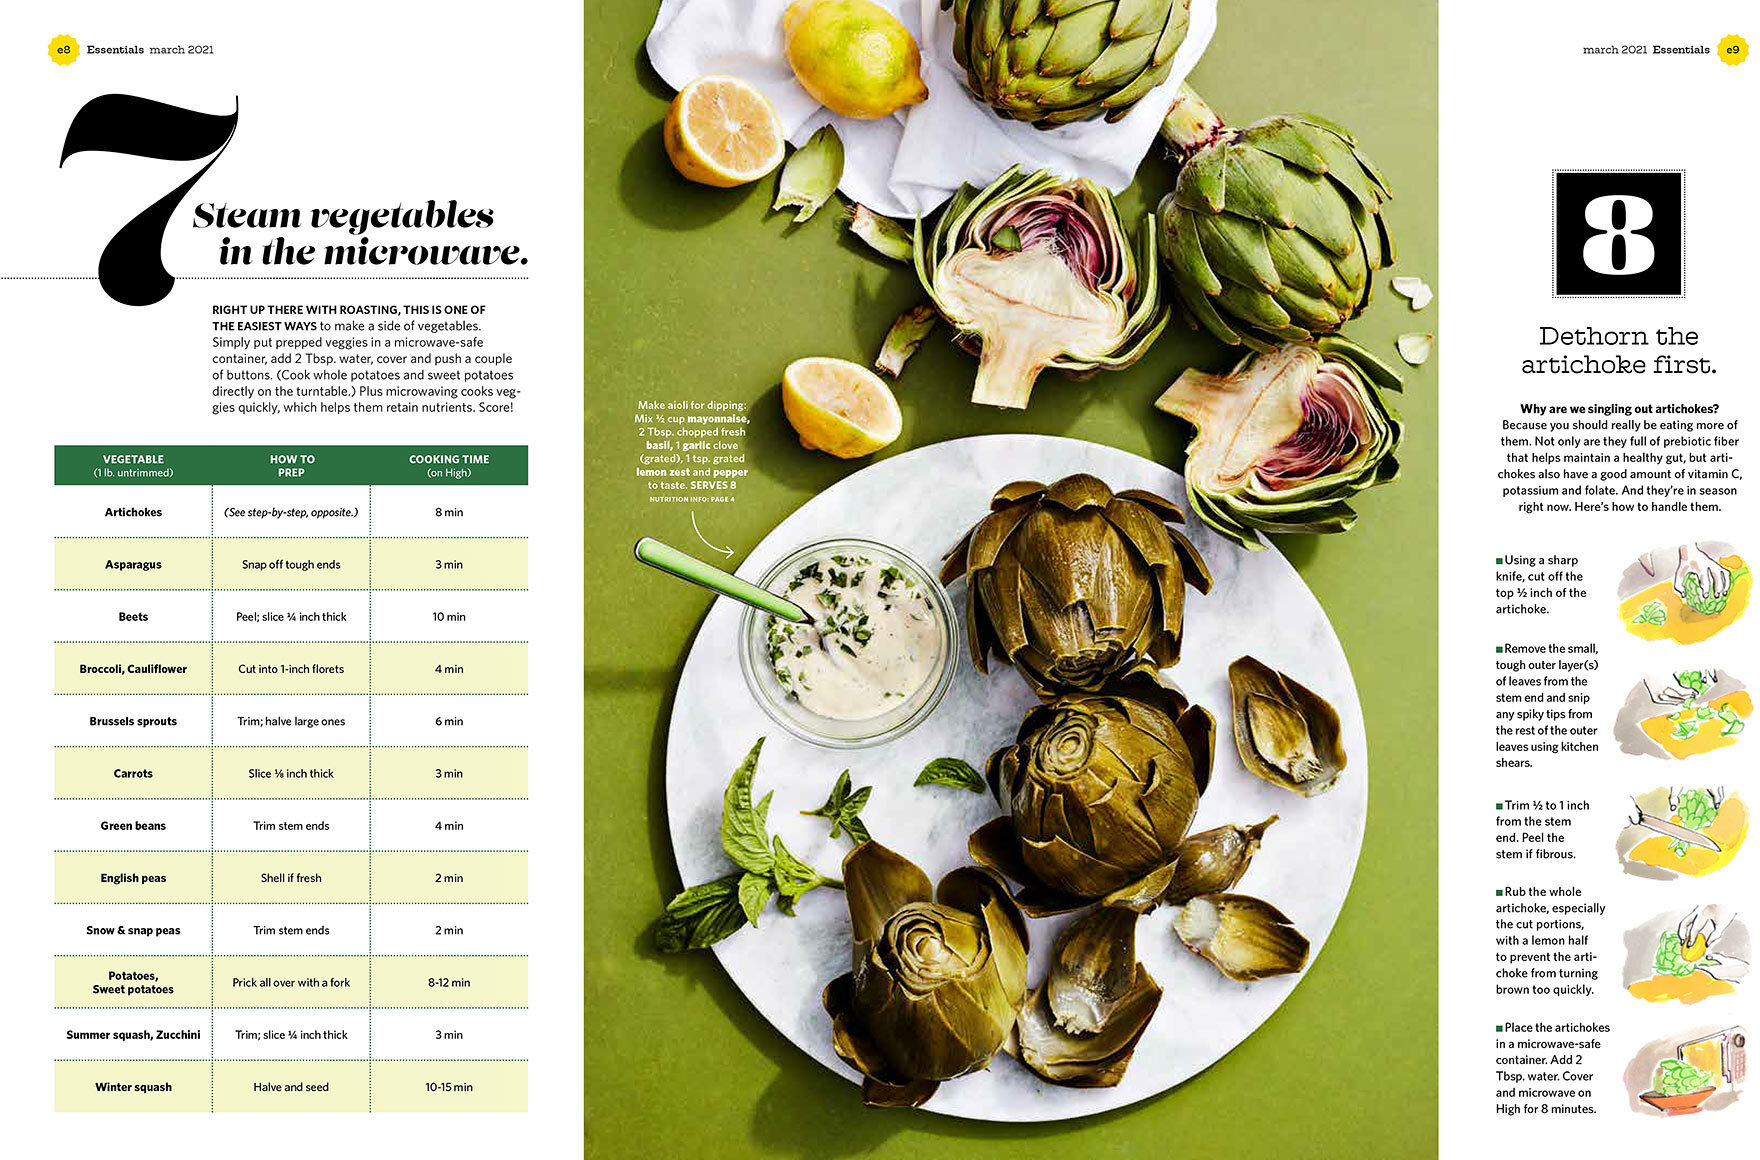 Eva-kolenko-best-top-food-photographer-produce-veggies-eating-well-recipes-heathy-vibrant-artichokes.jpg